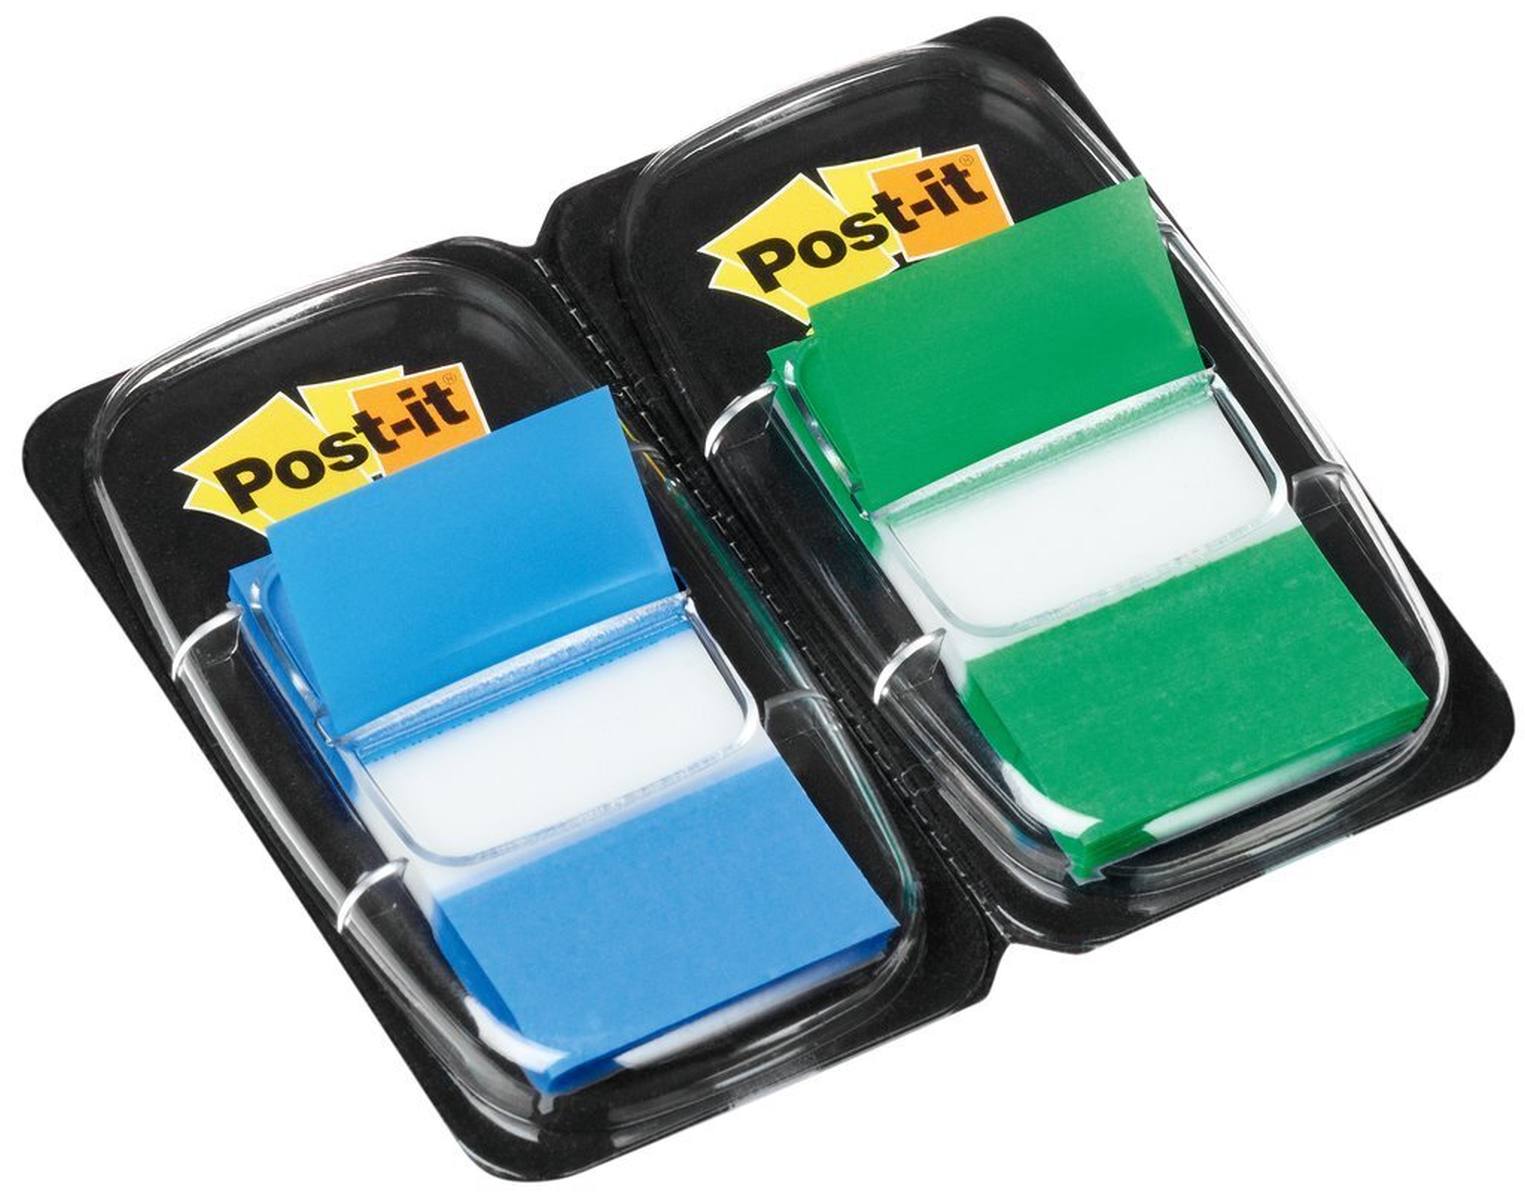 3M Post-it Indice I680-GB2, 25,4 mm x 43,2 mm, blu, verde, 2 x 50 strisce adesive in dispenser